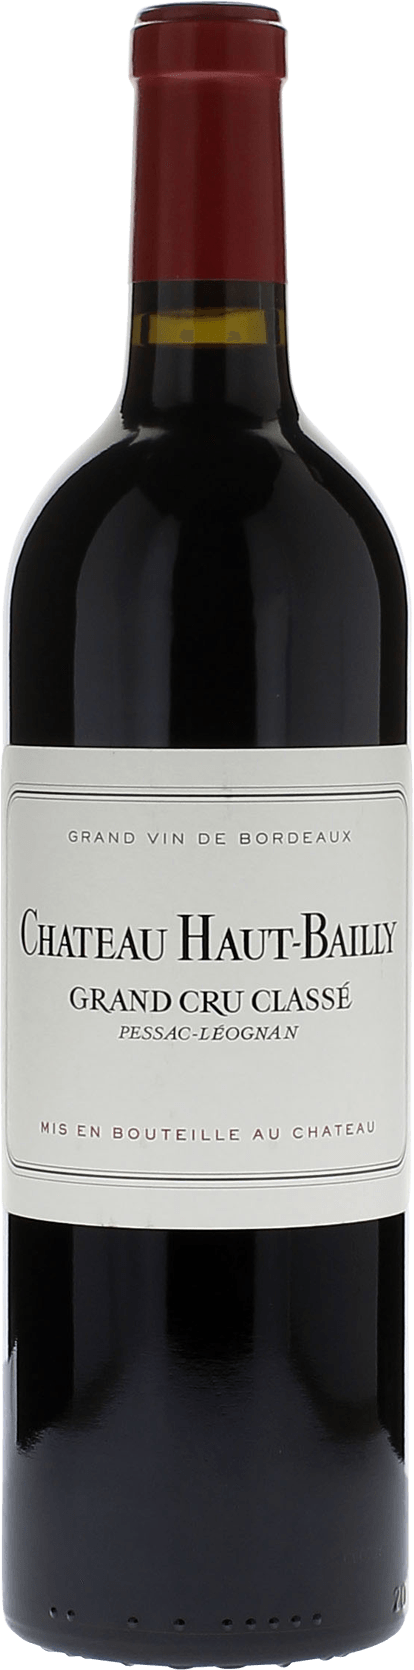 Haut bailly 2004 cru class Pessac-Lognan, Bordeaux rouge